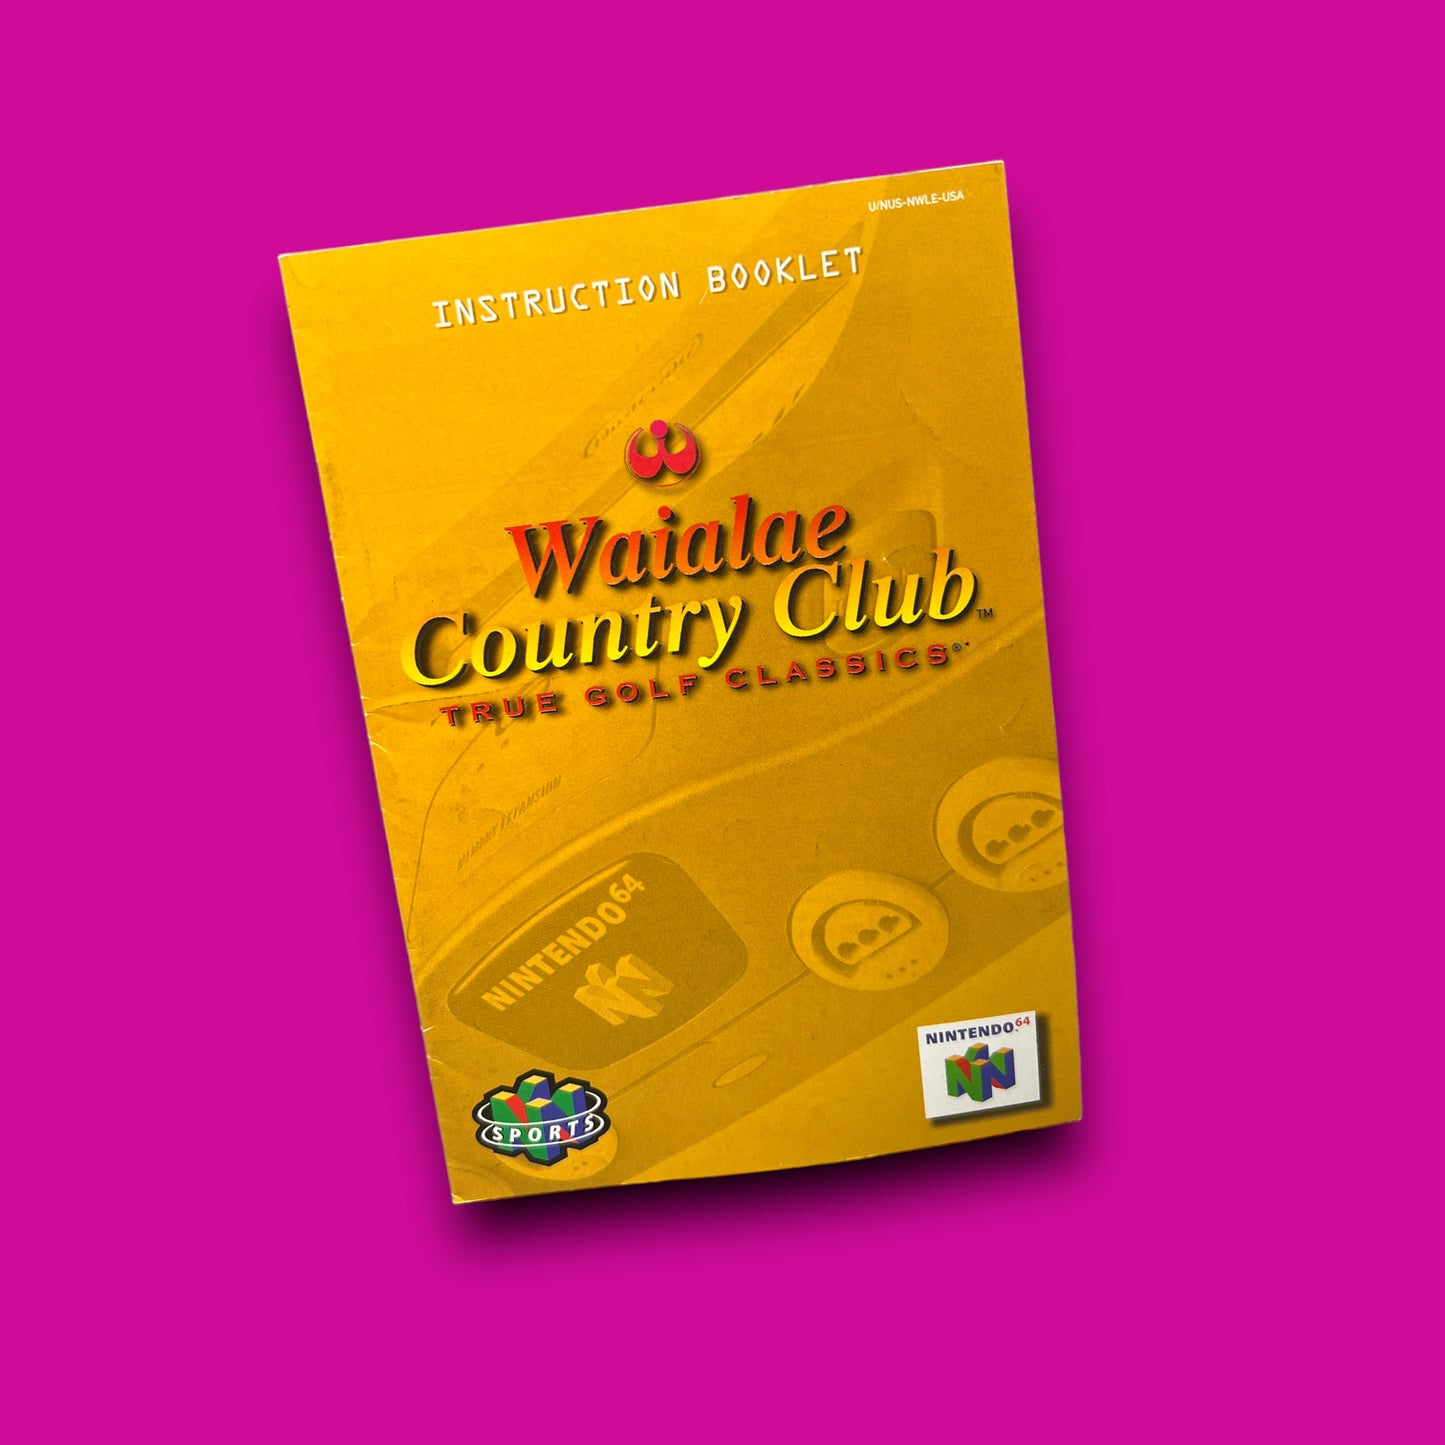 Waialae Country Club Manual (Nintendo 64, 1998)